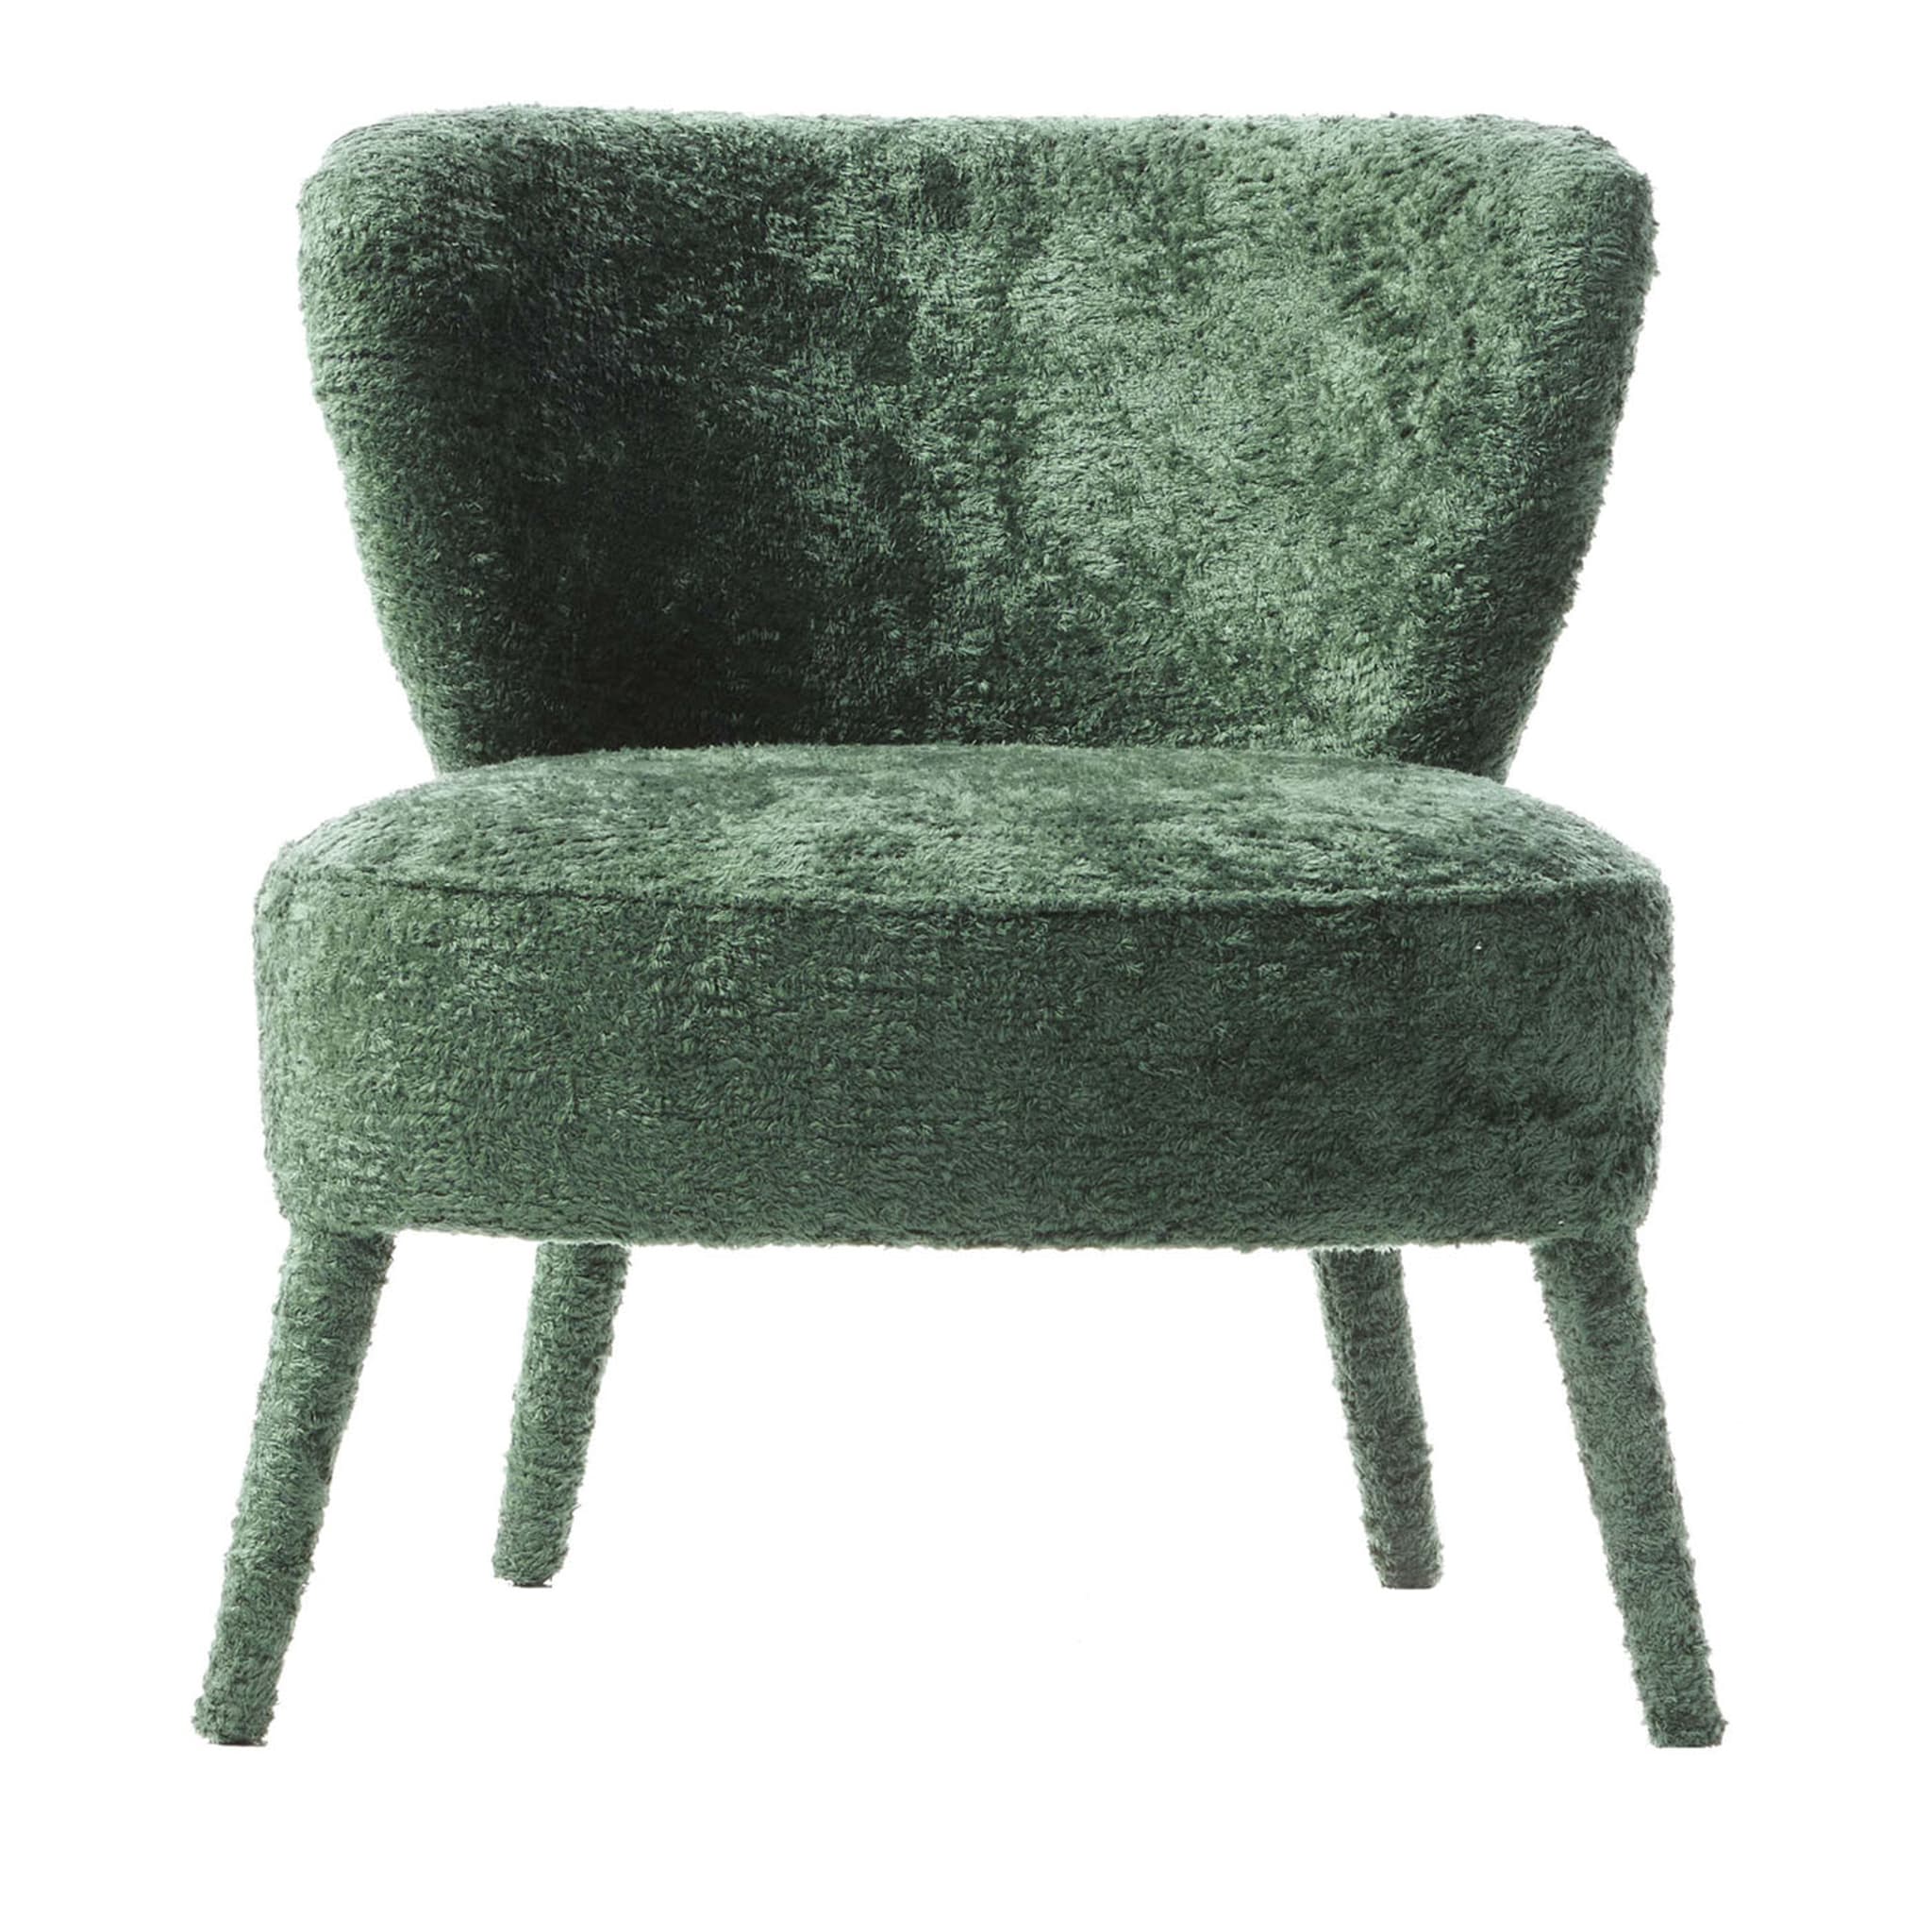 Cloe' Upholstered Green Lounge Chair - Main view